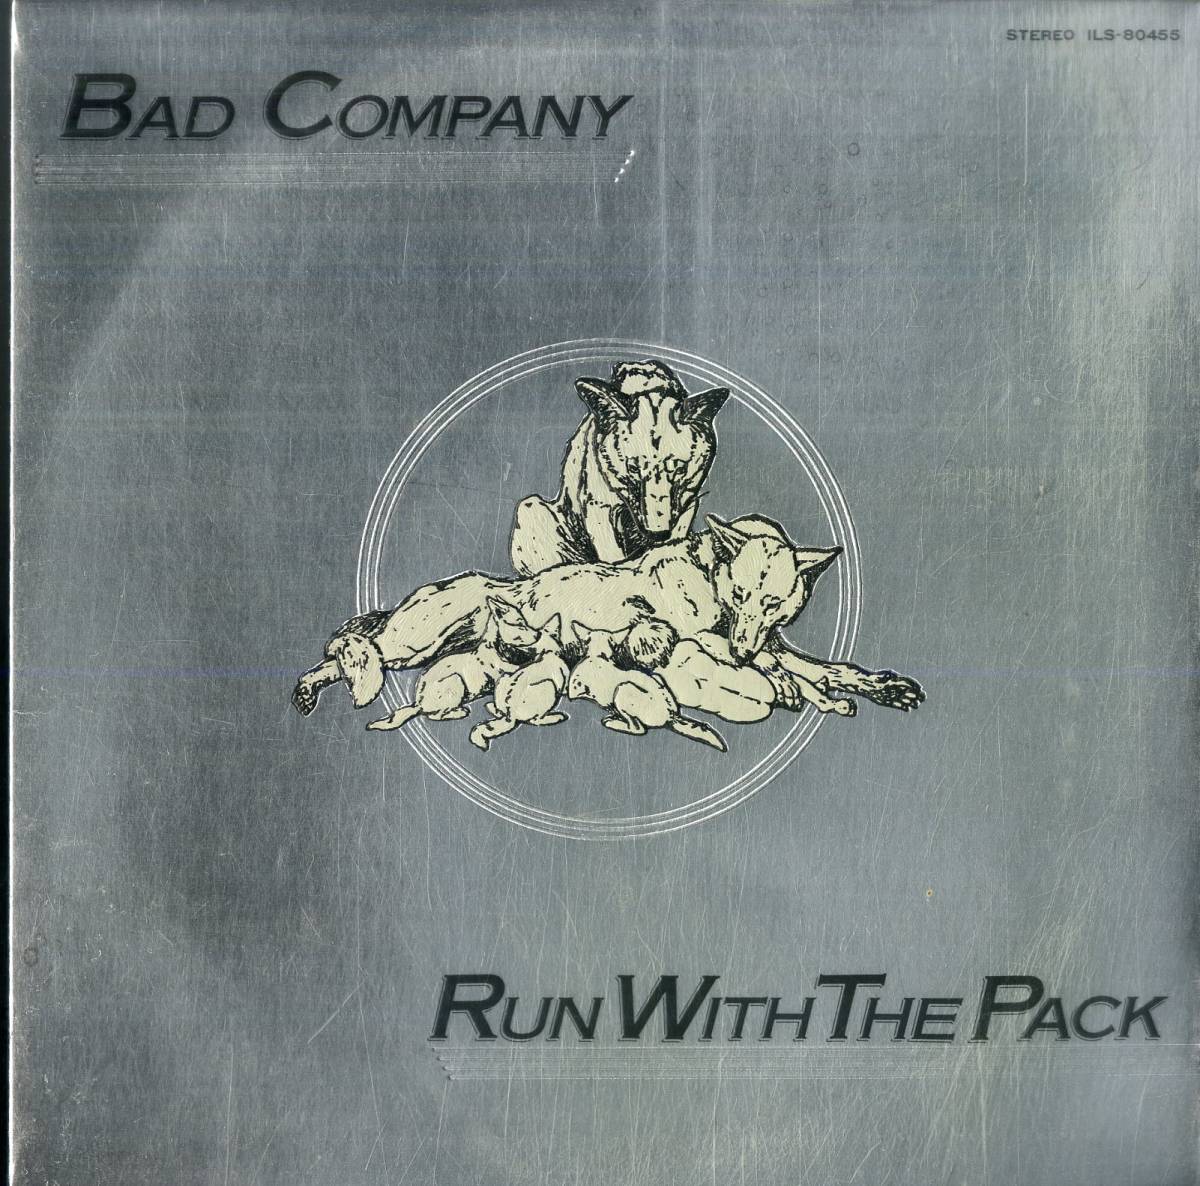 A00582502/LP/バッド・カンパニー(BAD COMPANY)「Run With The Pack / Bad Company III (1976年・ILS-80455・ハードロック)」_画像1